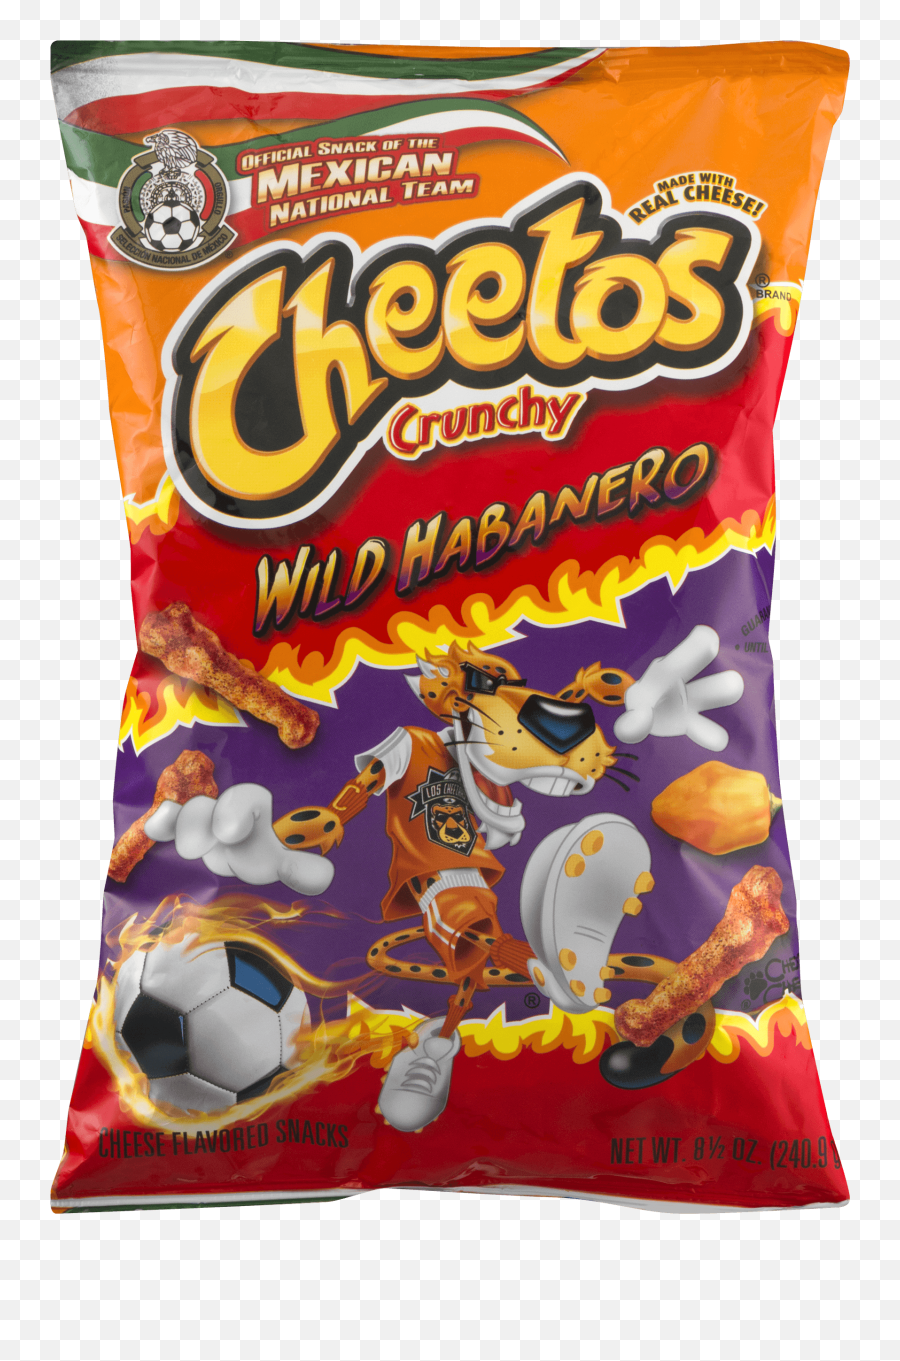 Cheetos Crunchy Wild Habanero Cheese Flavored Snacks 85 Oz - Hot Cheetos Pn...